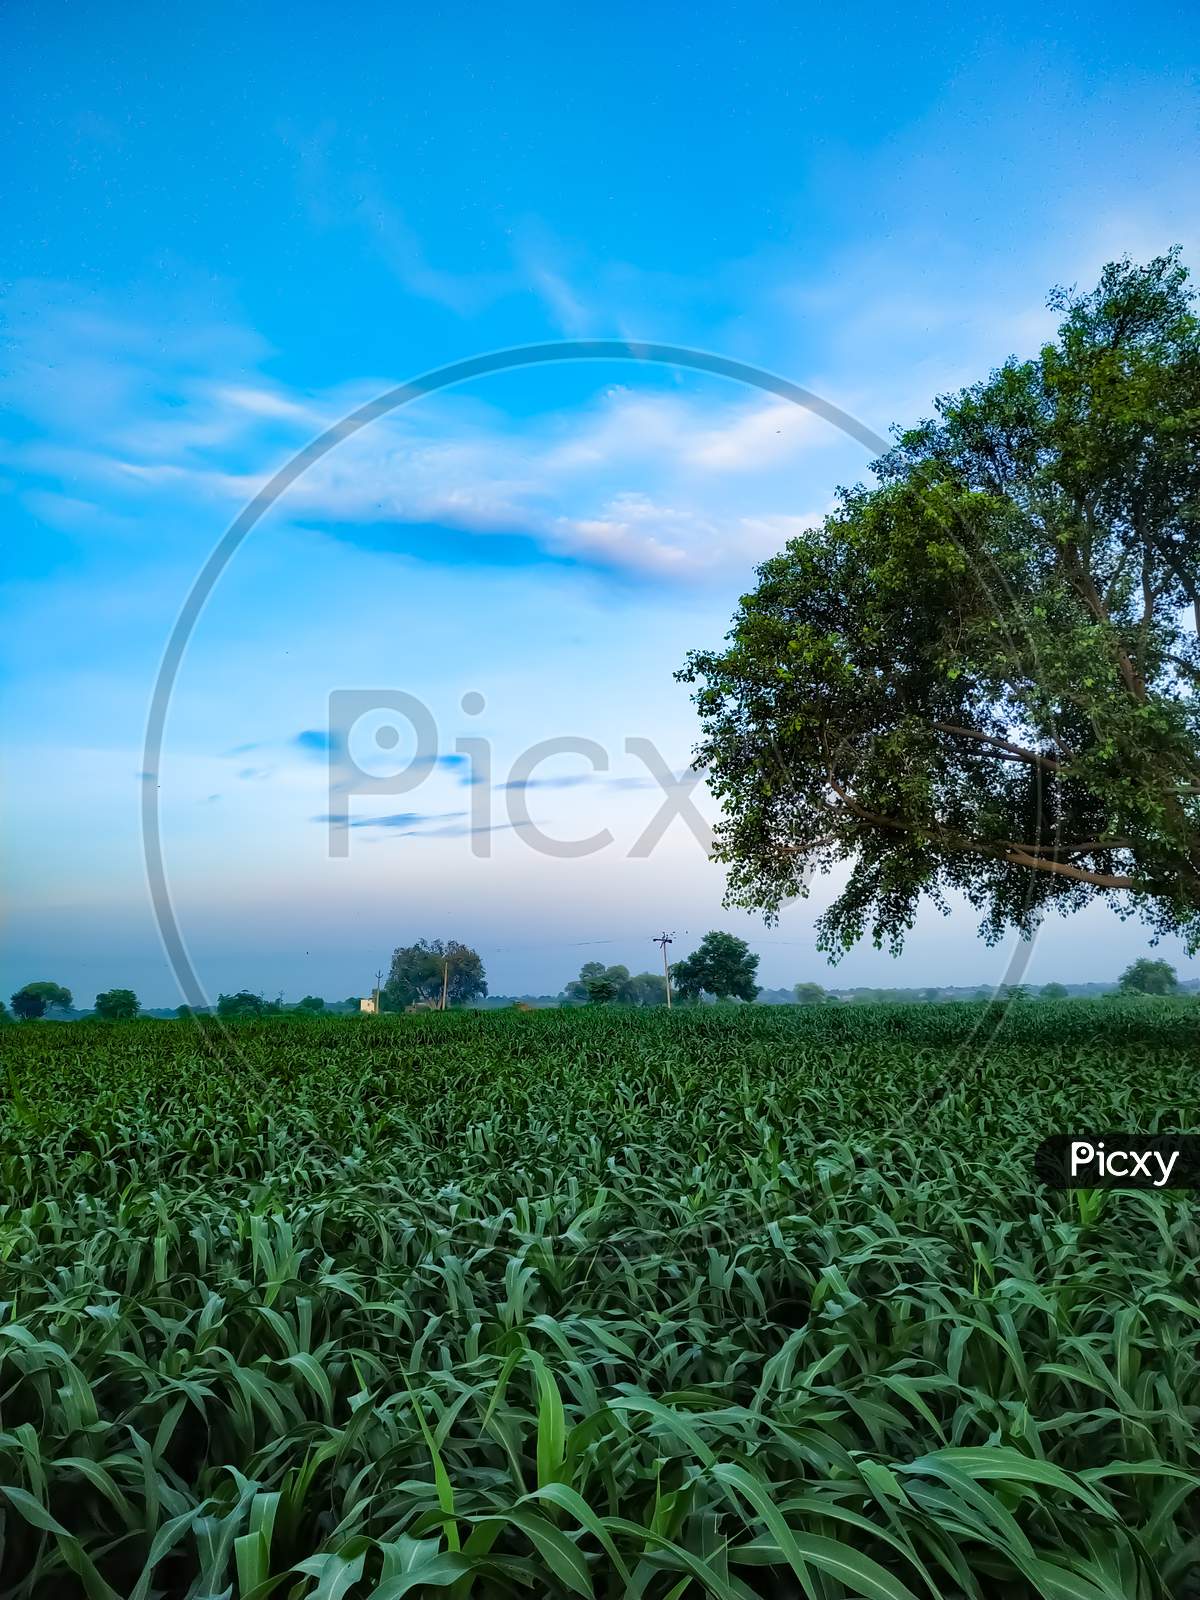 Millet Plants Field With Bodhi Tree On Backdrop On Blue Sky